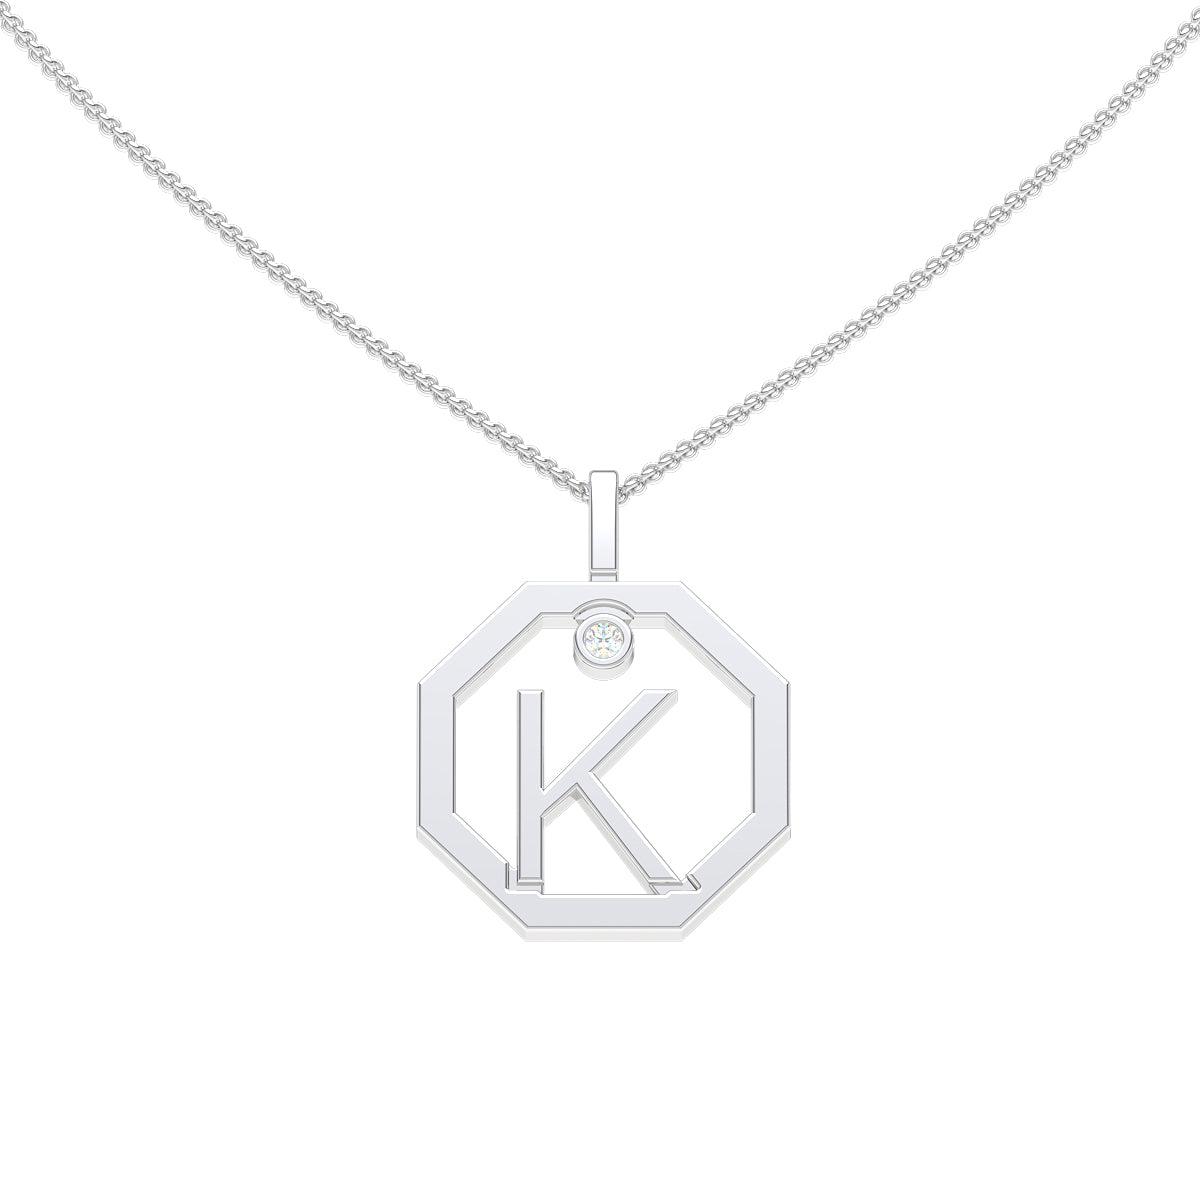 Personalised-Initial-K-diamond-white-gold-pendant-Lizunova-Fine-Jewels-Sydney-NSW-Australia